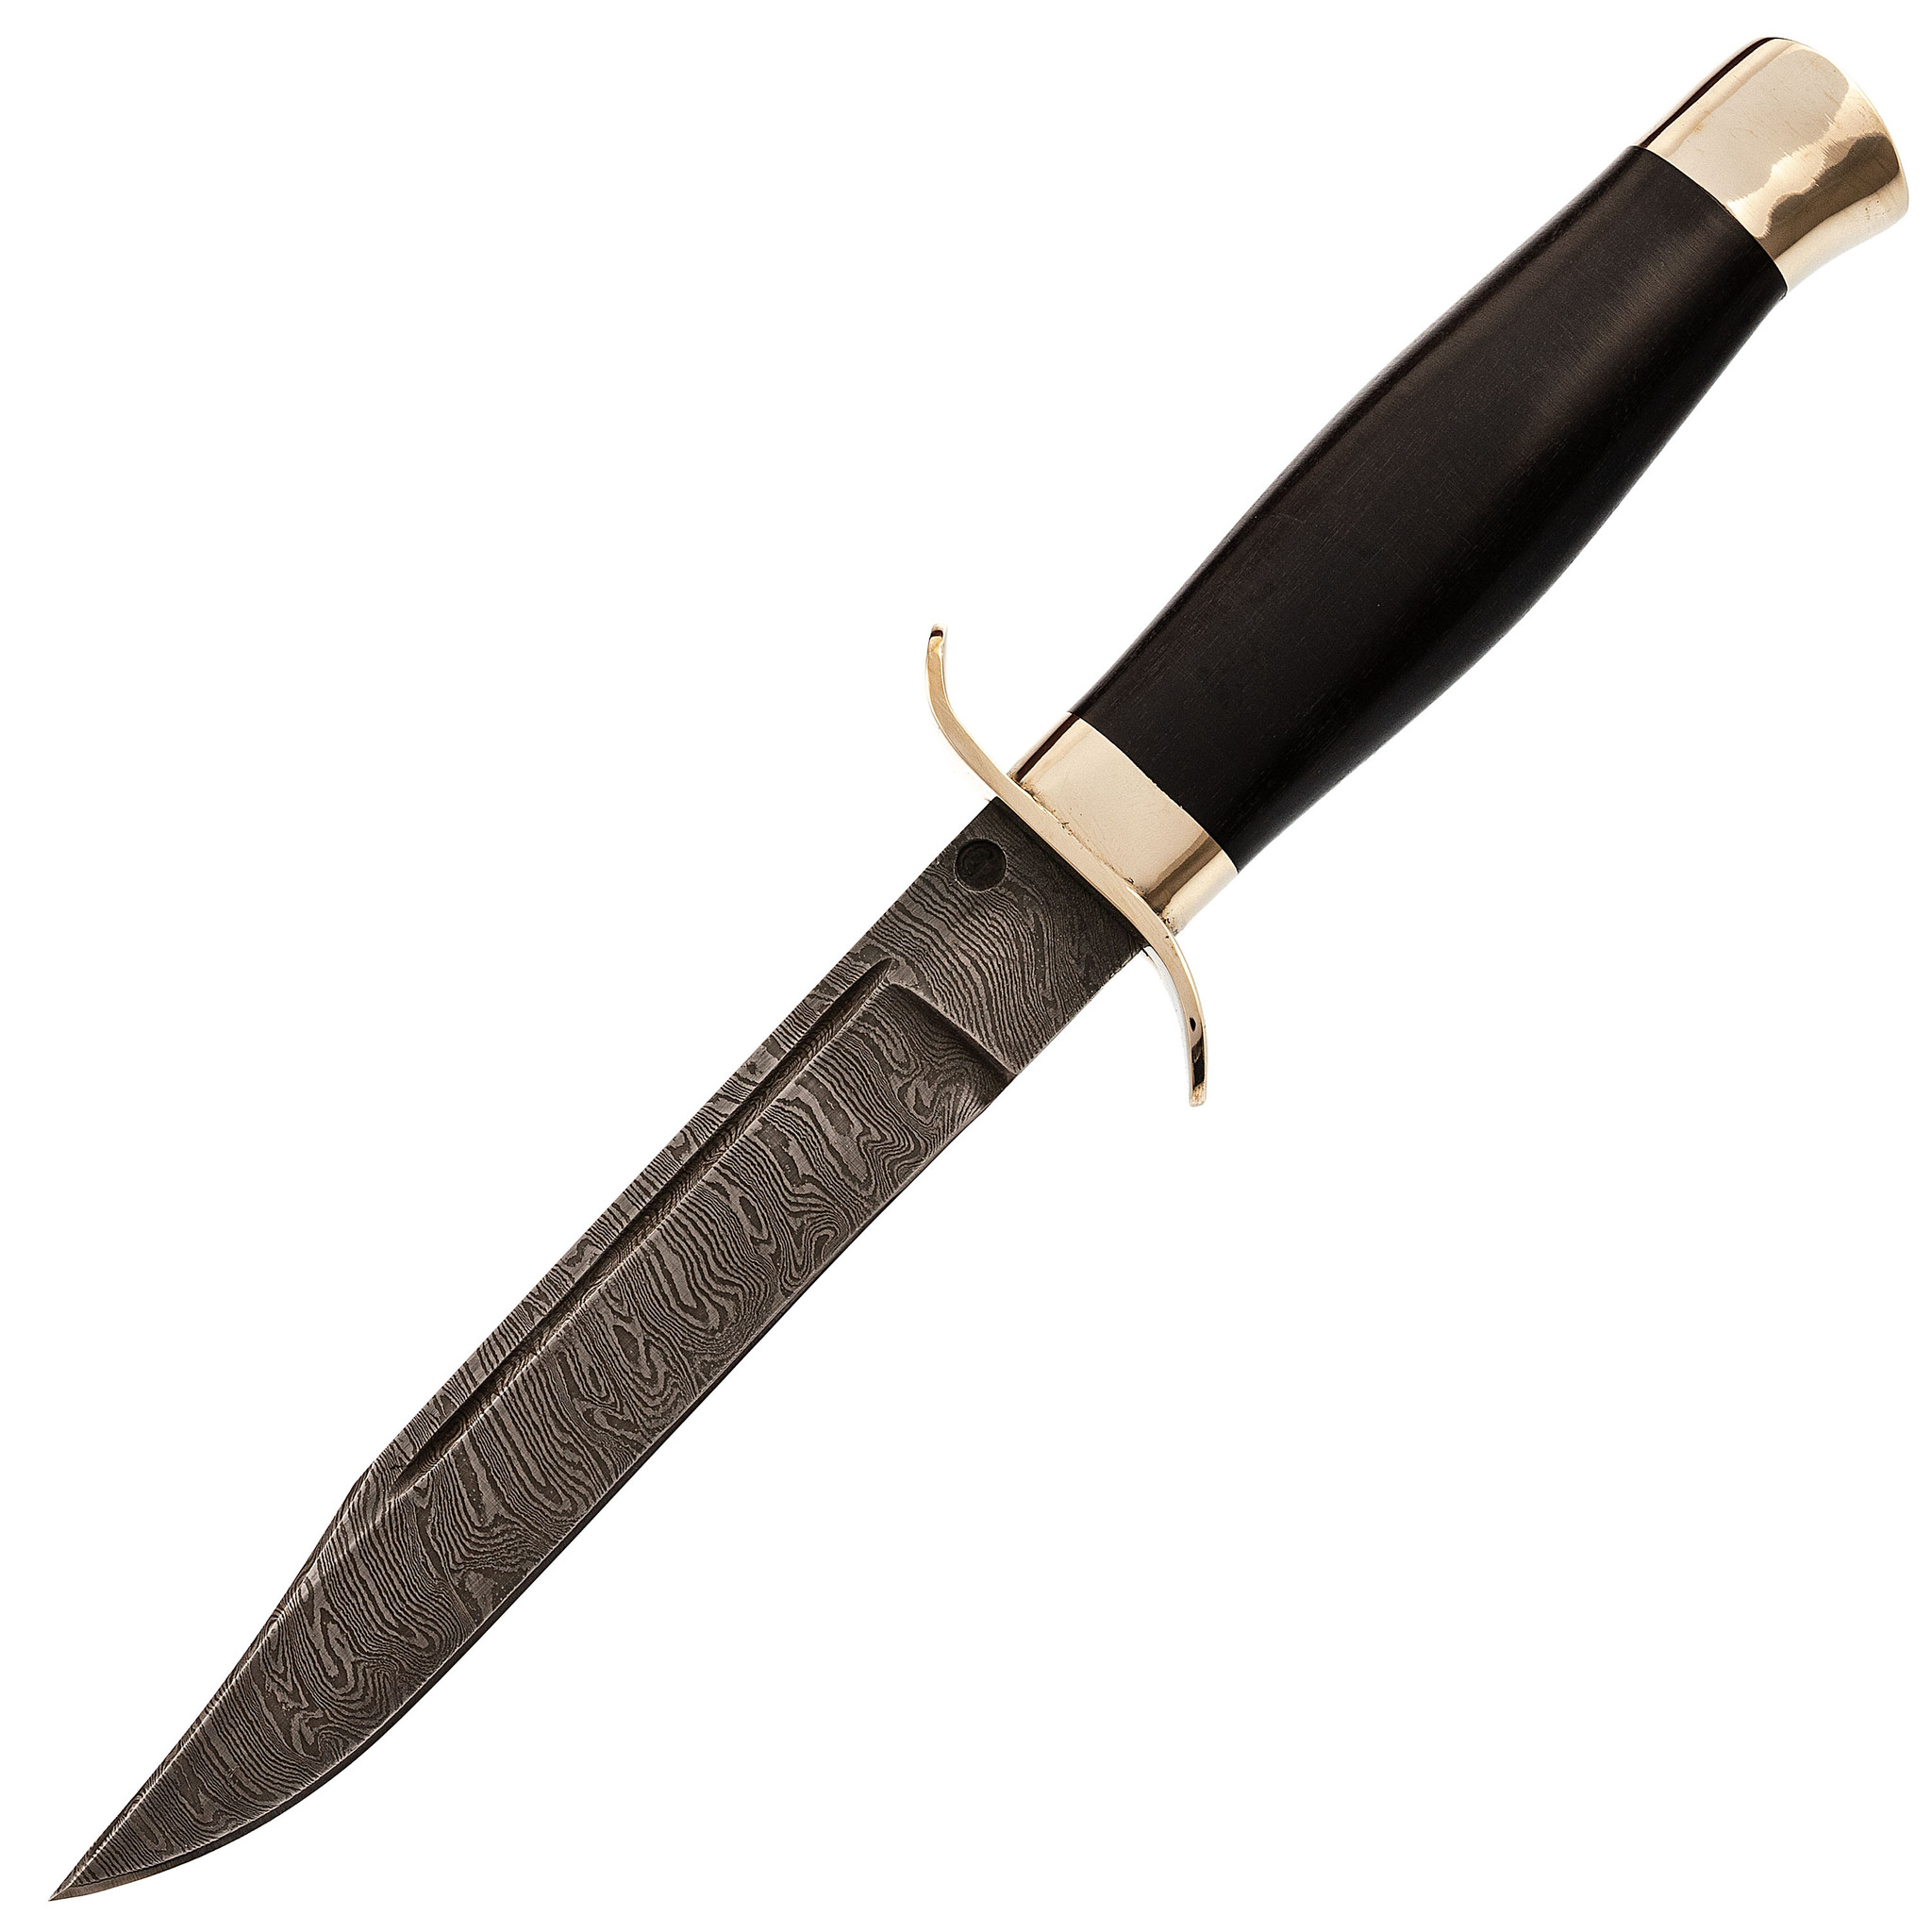 Нож НР-40, дамасская сталь, рукоять граб складной нож bestech thyra сталь m390 рукоять титан тимаскус